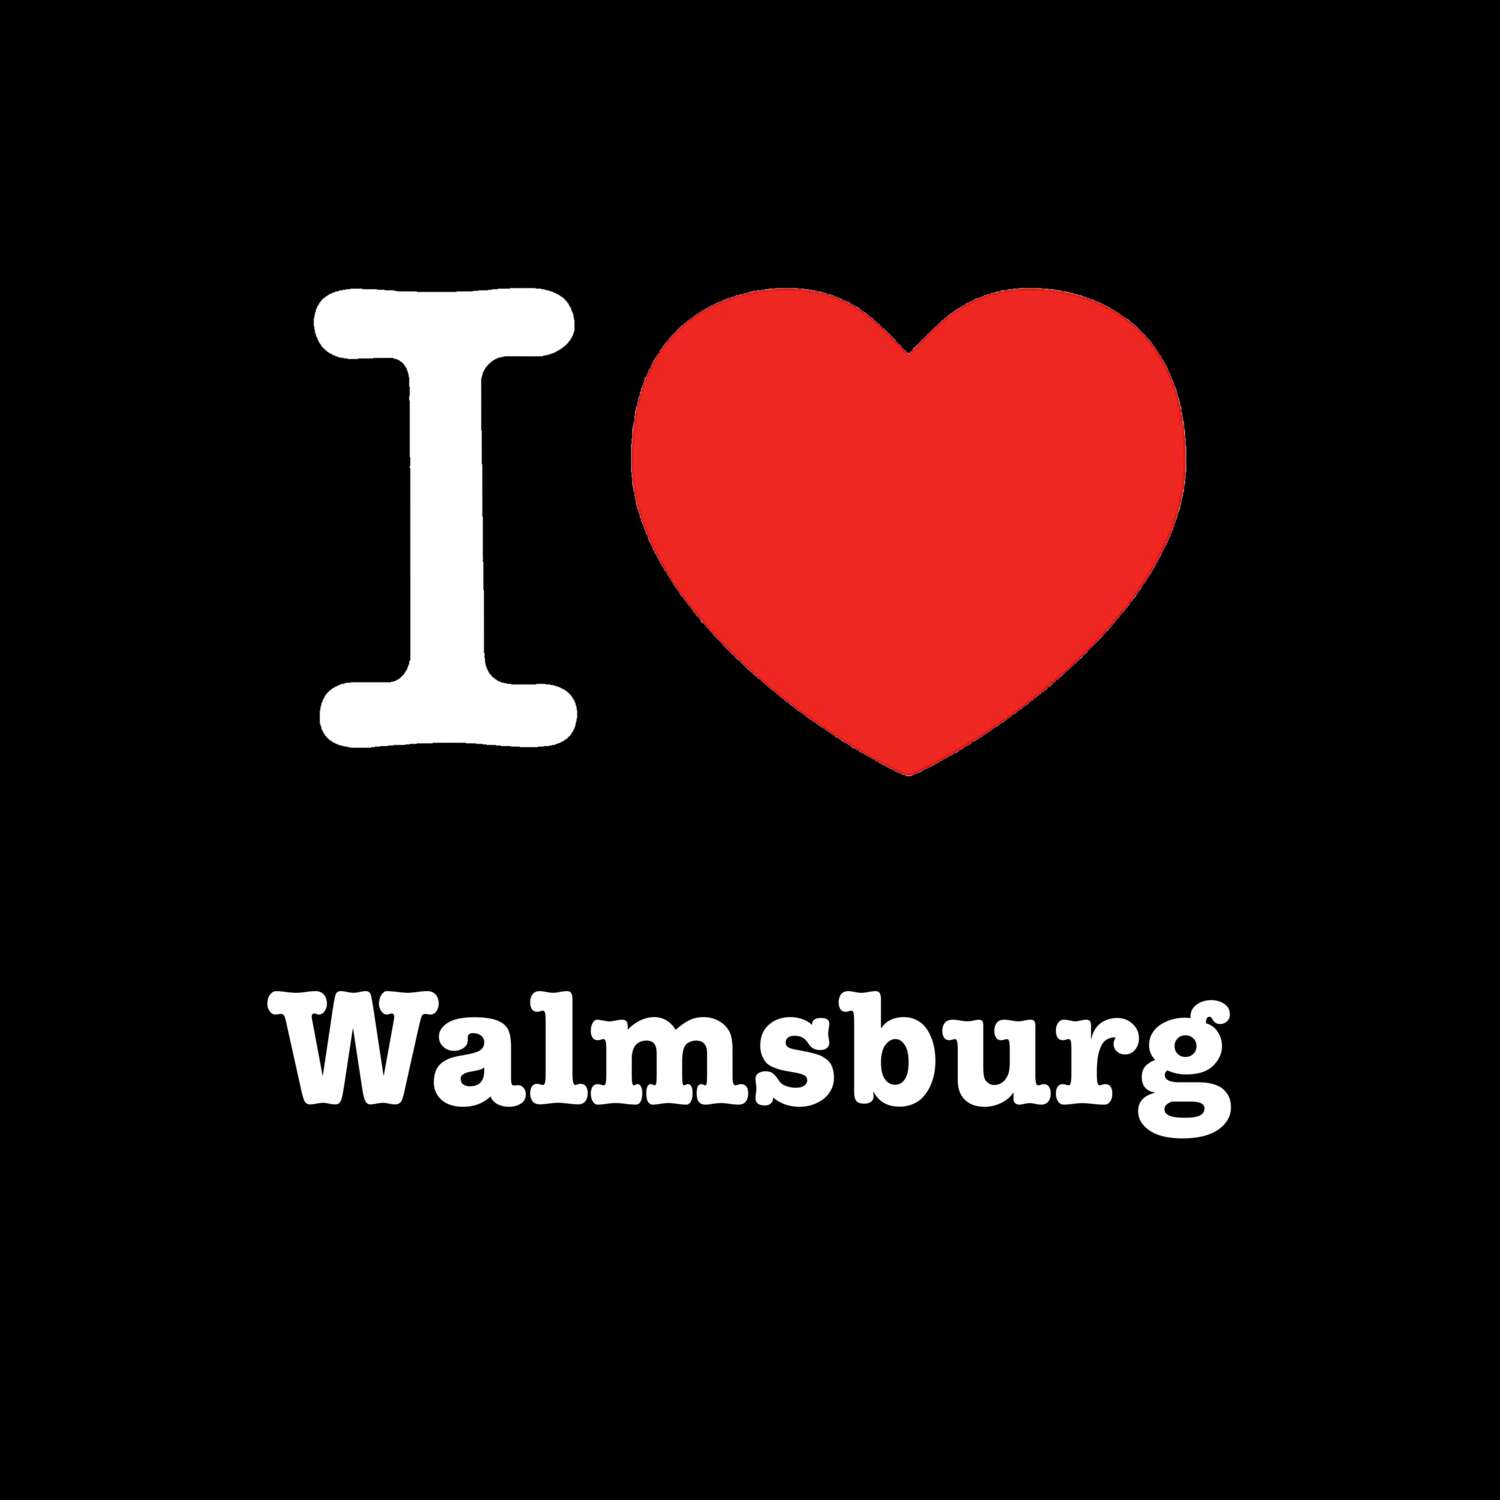 Walmsburg T-Shirt »I love«